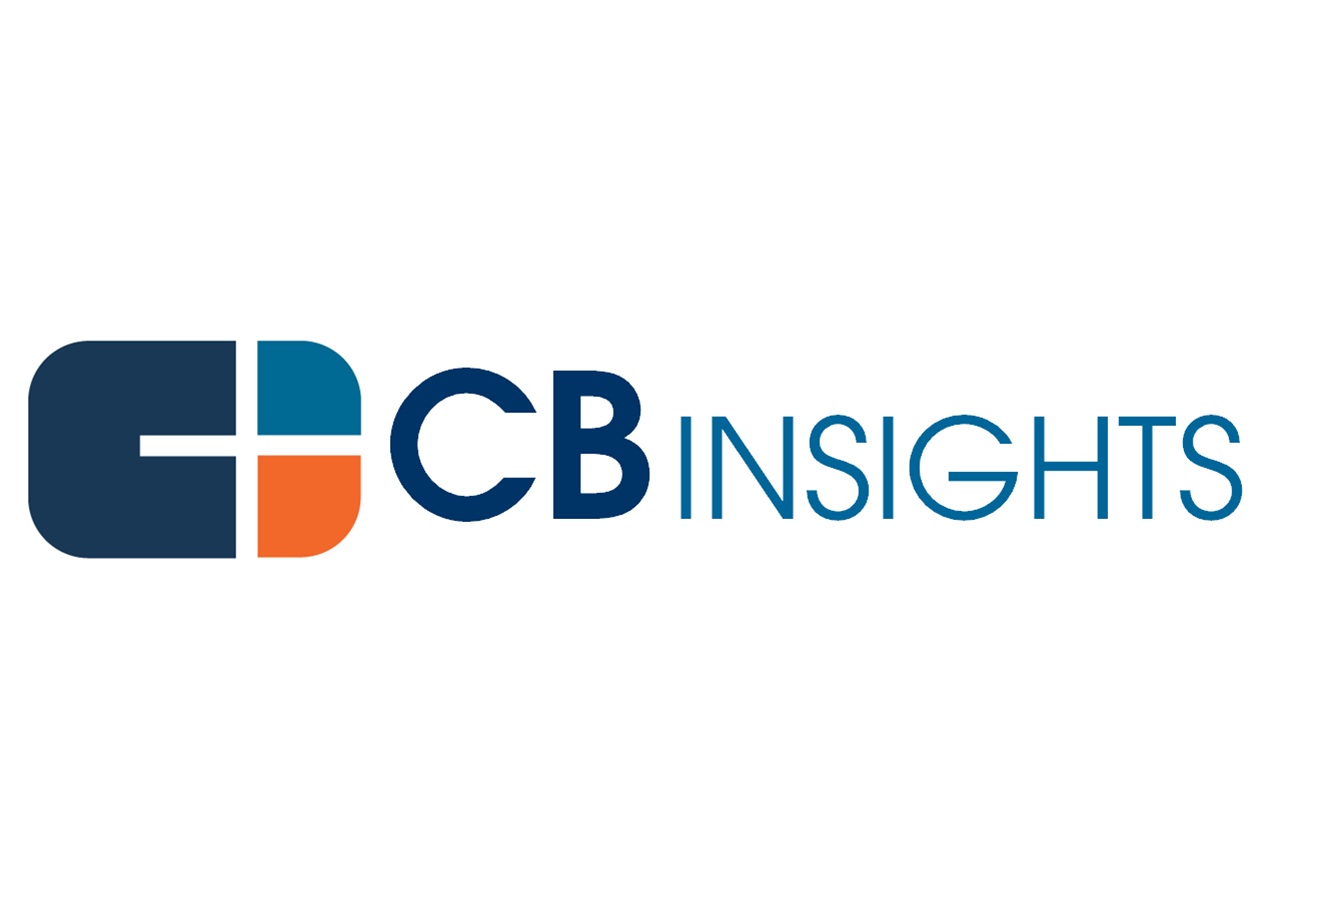 cbinsights logo